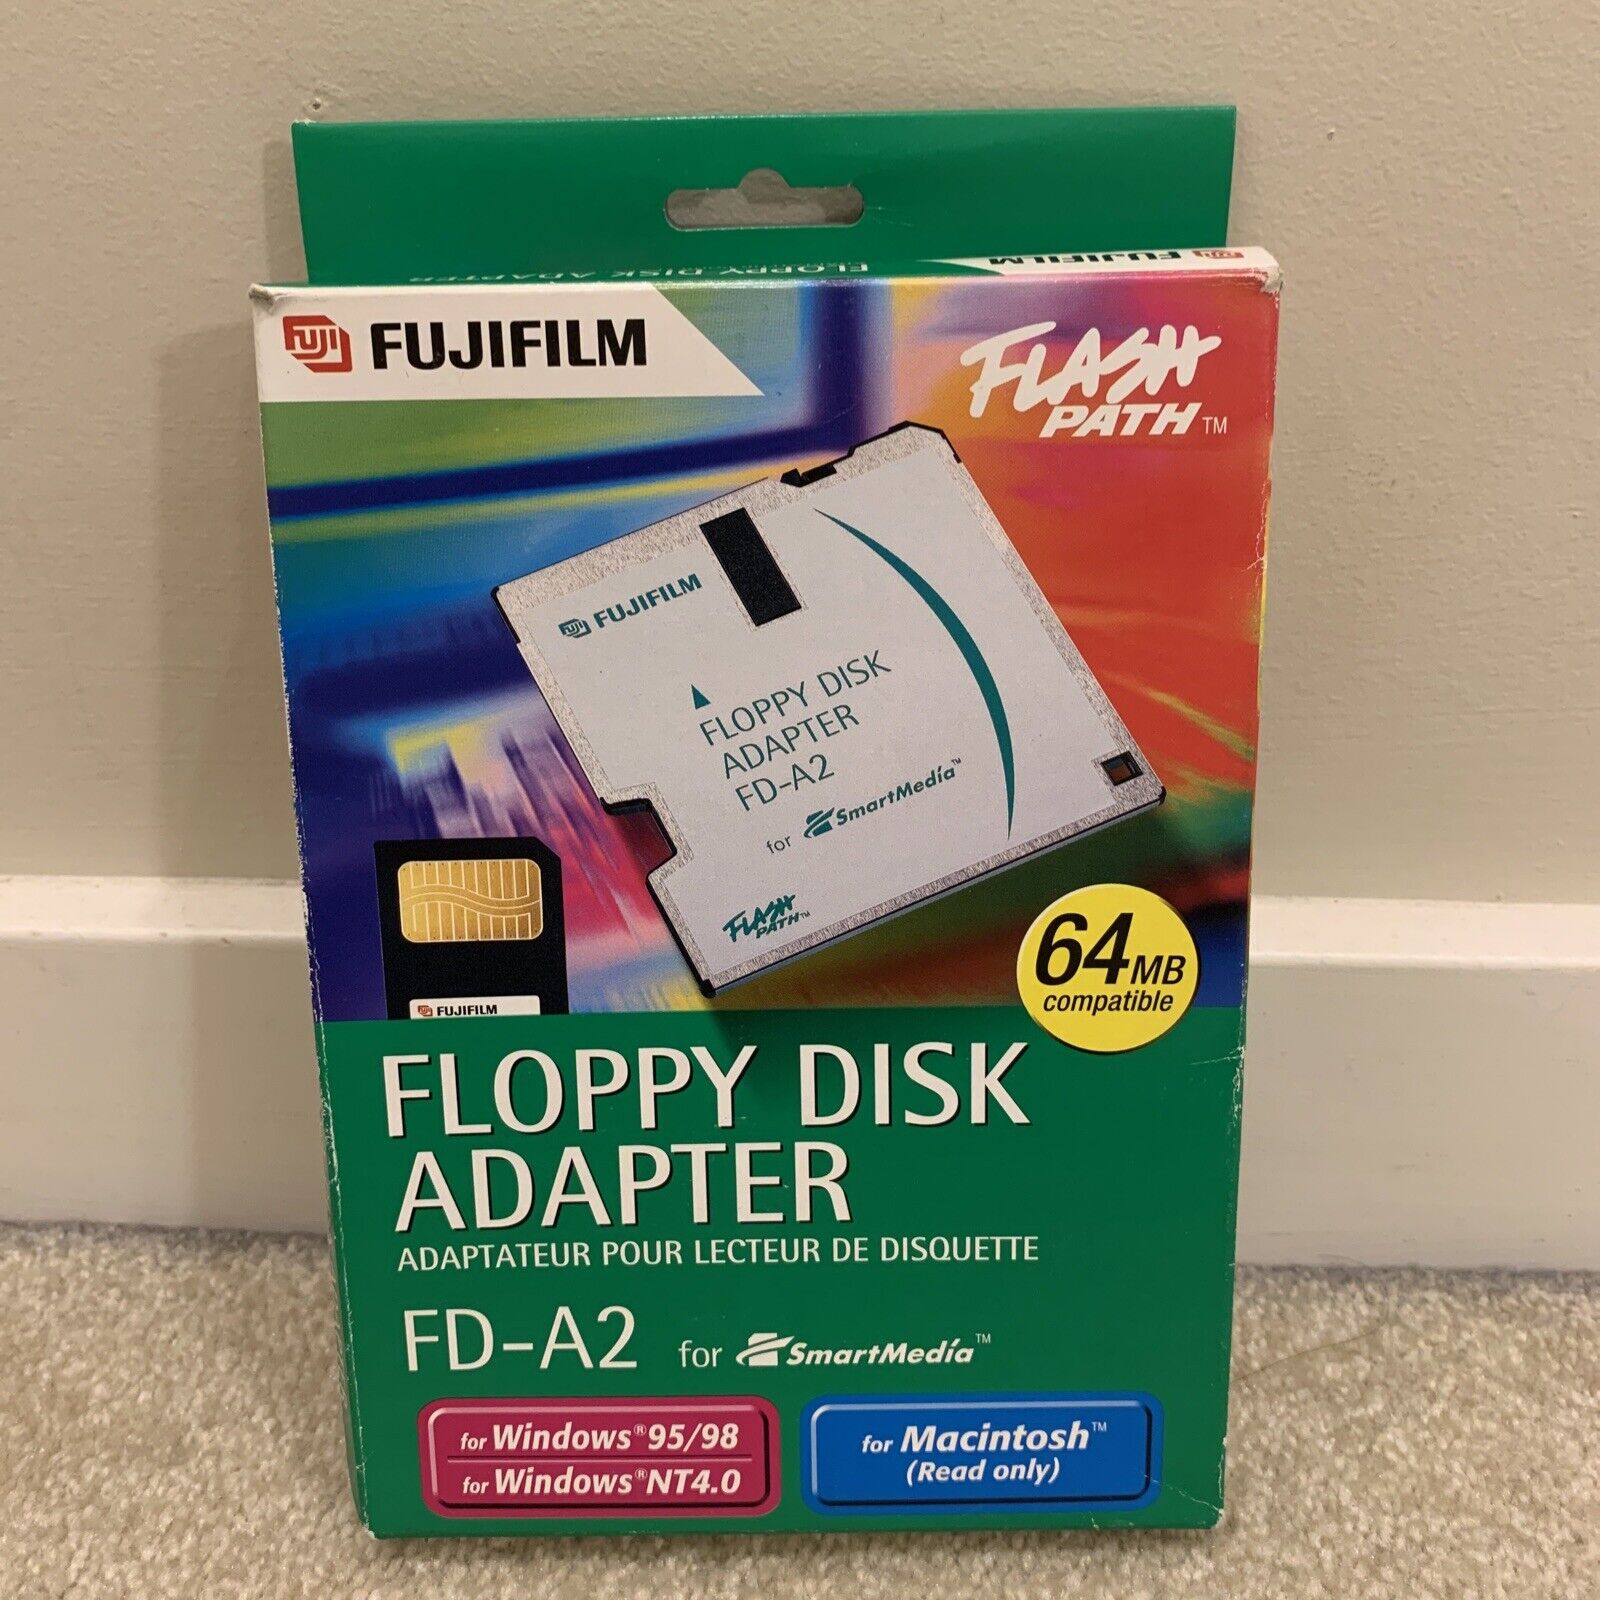 Fujifilm Floppy Disk Adapter FD-A2 Flash Path SmartMedia 64 MB PC MAC New